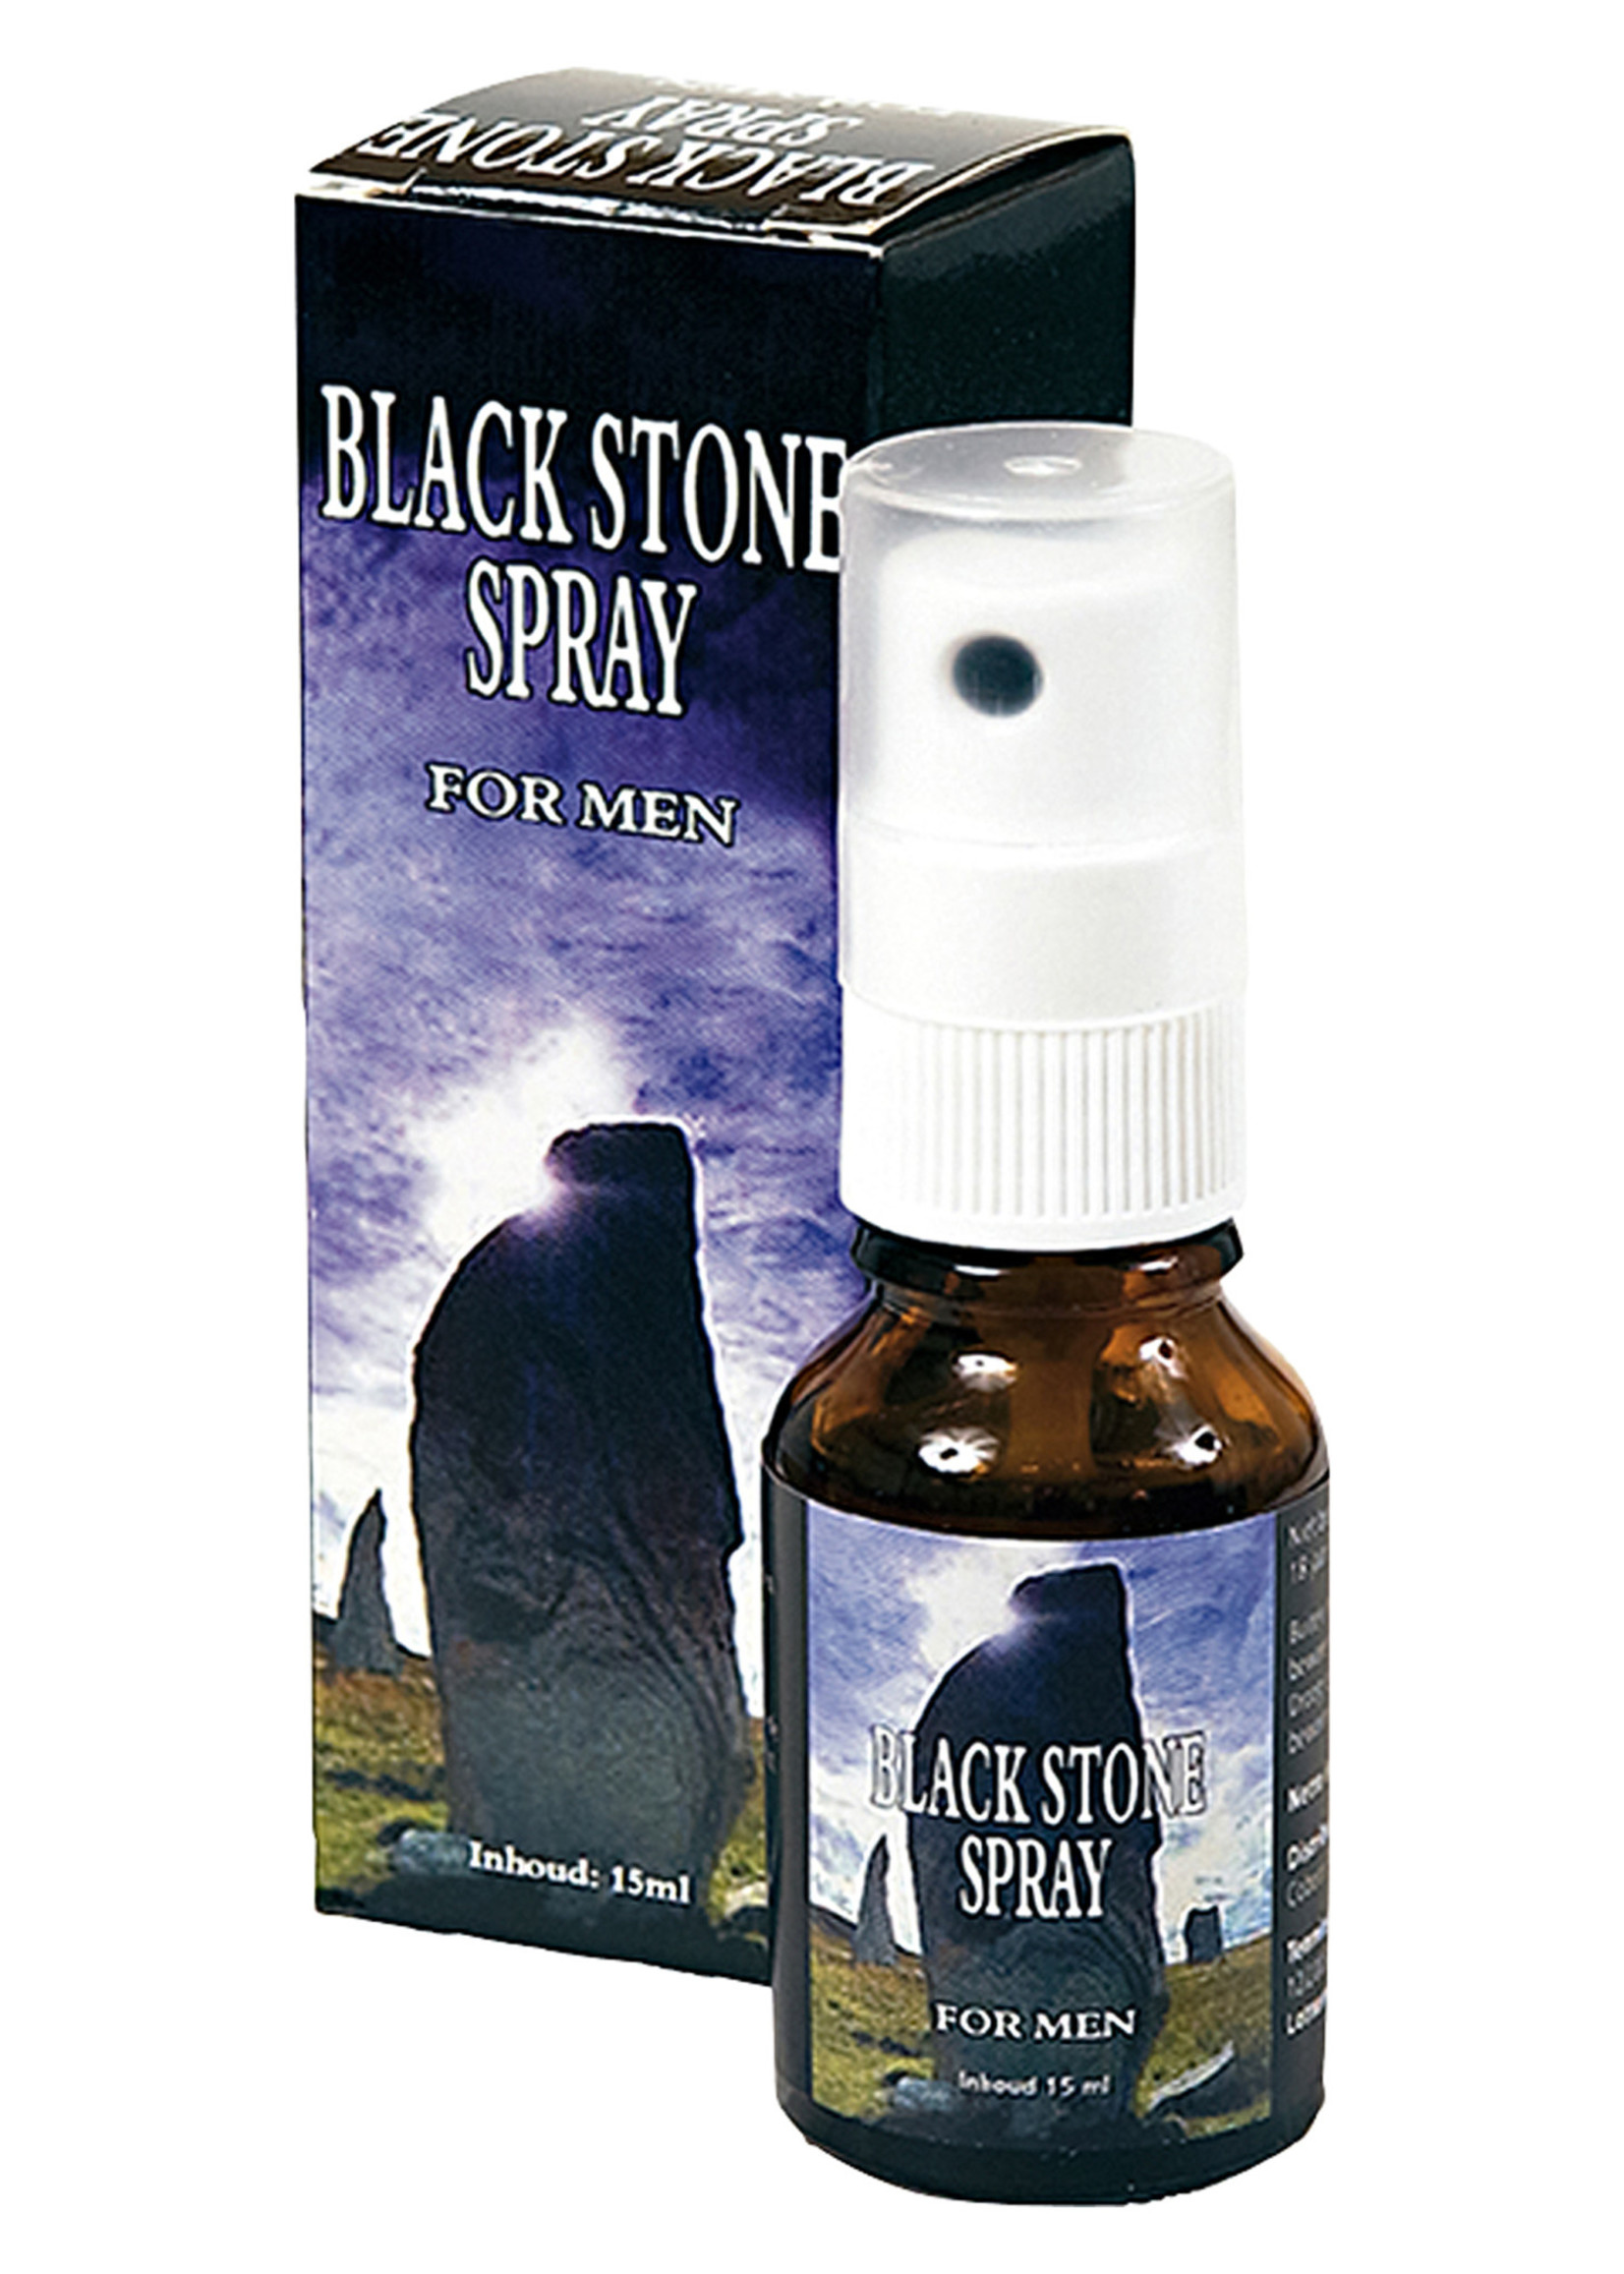 Black stone delay spray - 15 ml